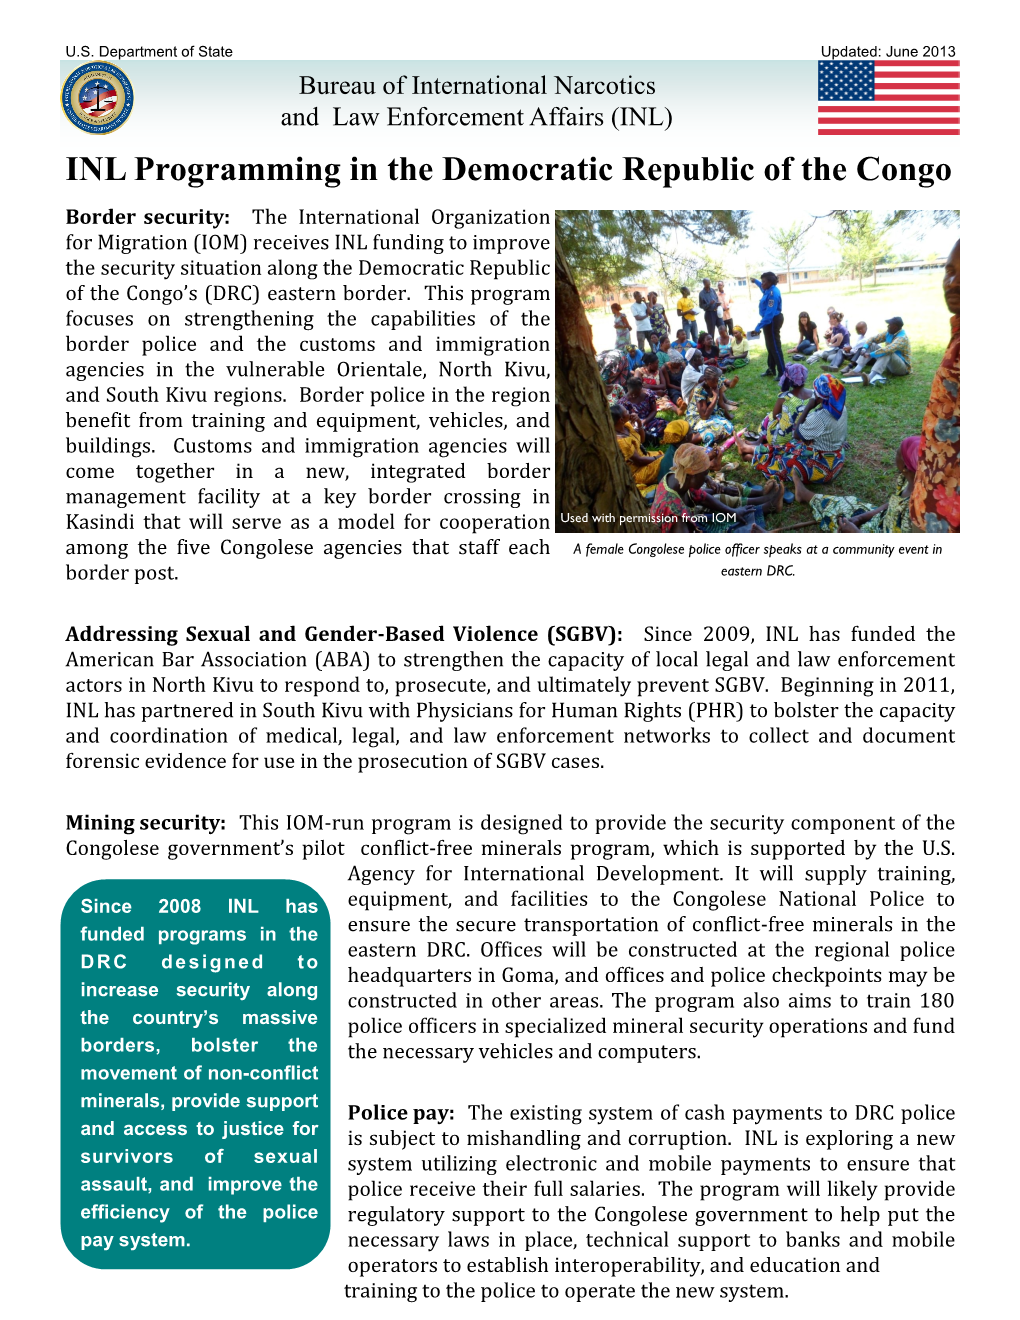 INL Programming in the Democratic Republic of the Congo